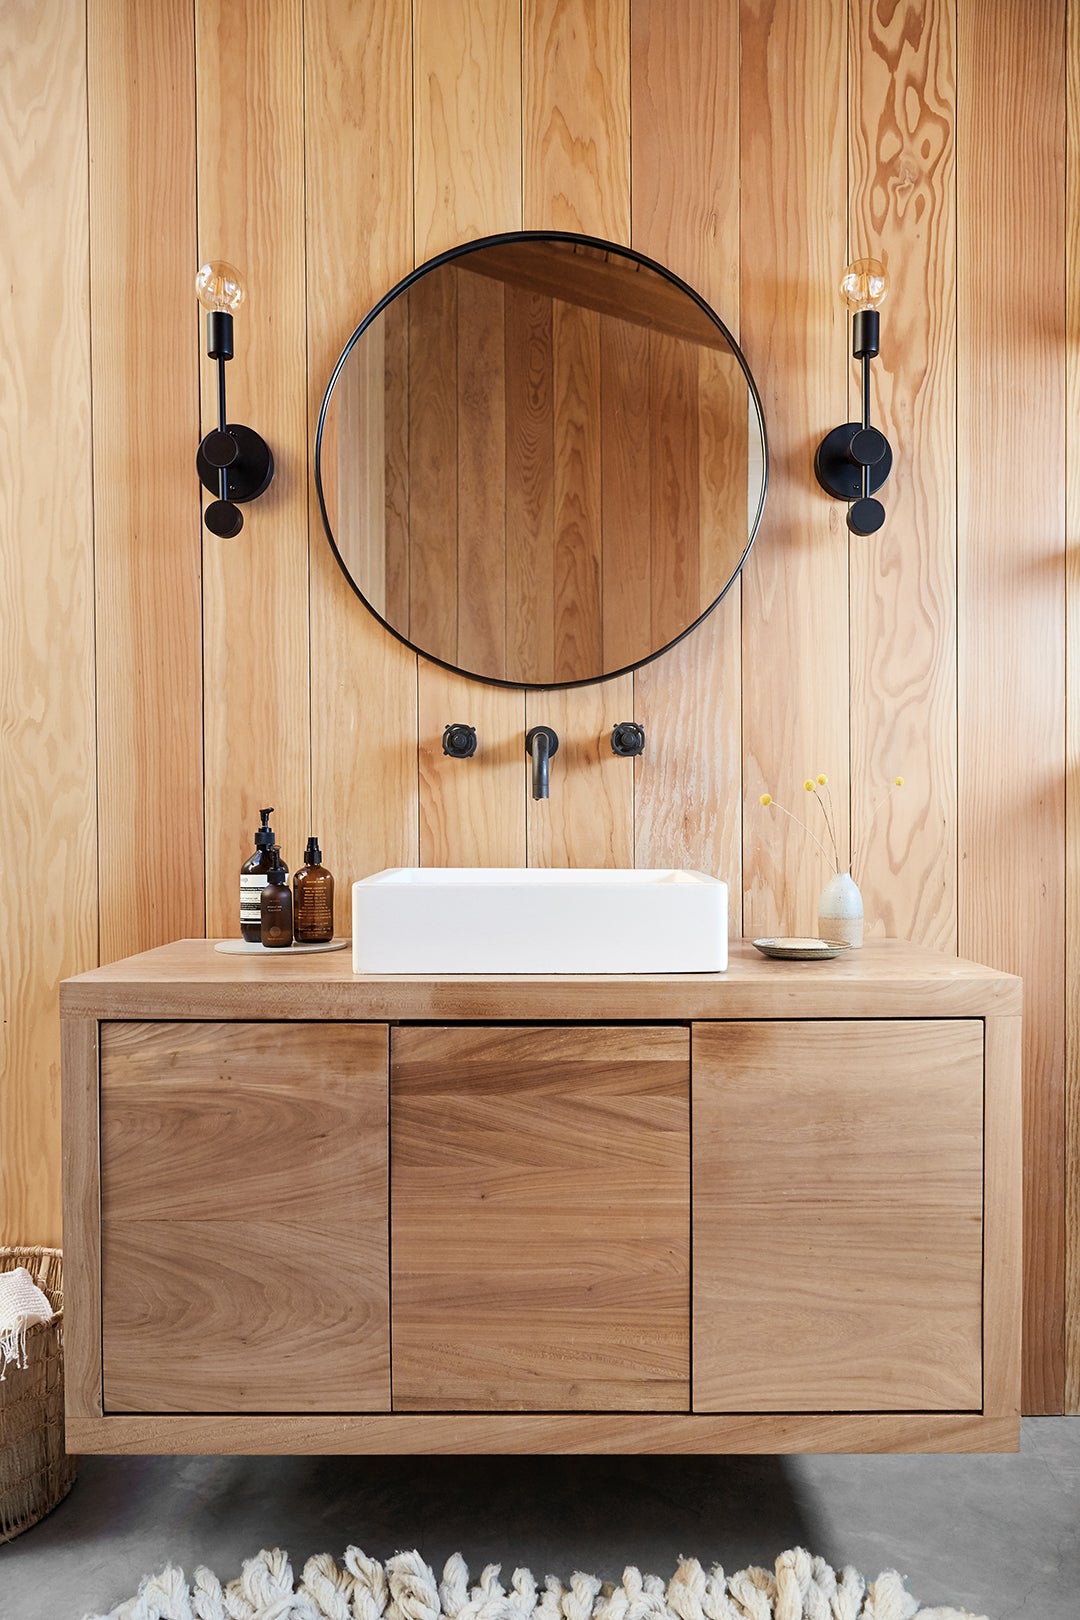 All-wood bathroom walls and floating vanity.